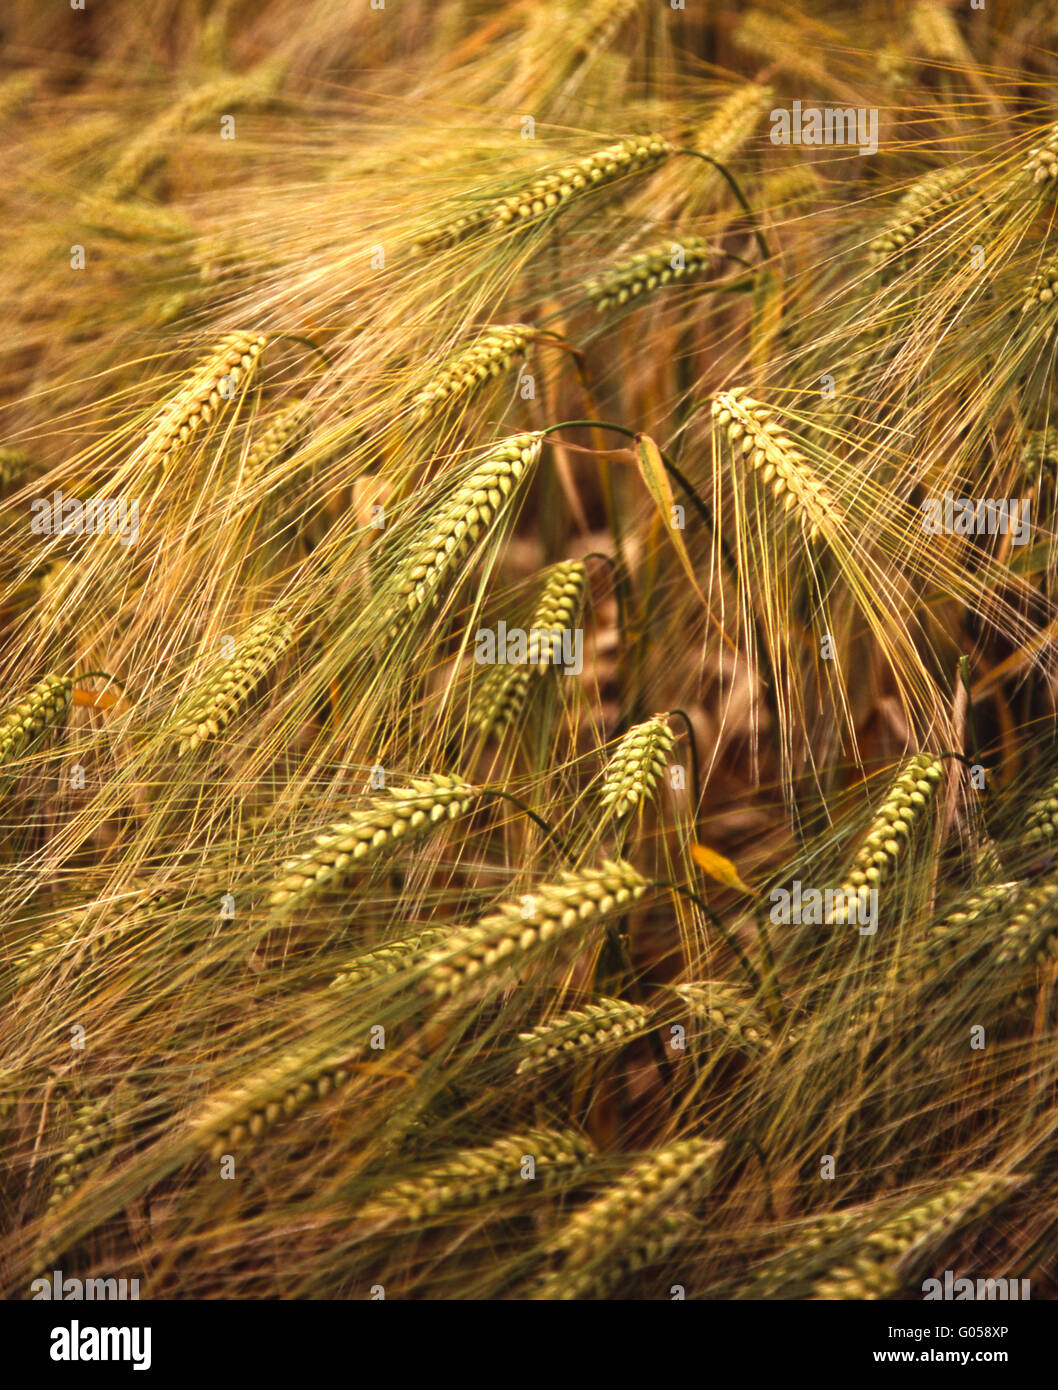 Golden ears of ripening barley Stock Photo